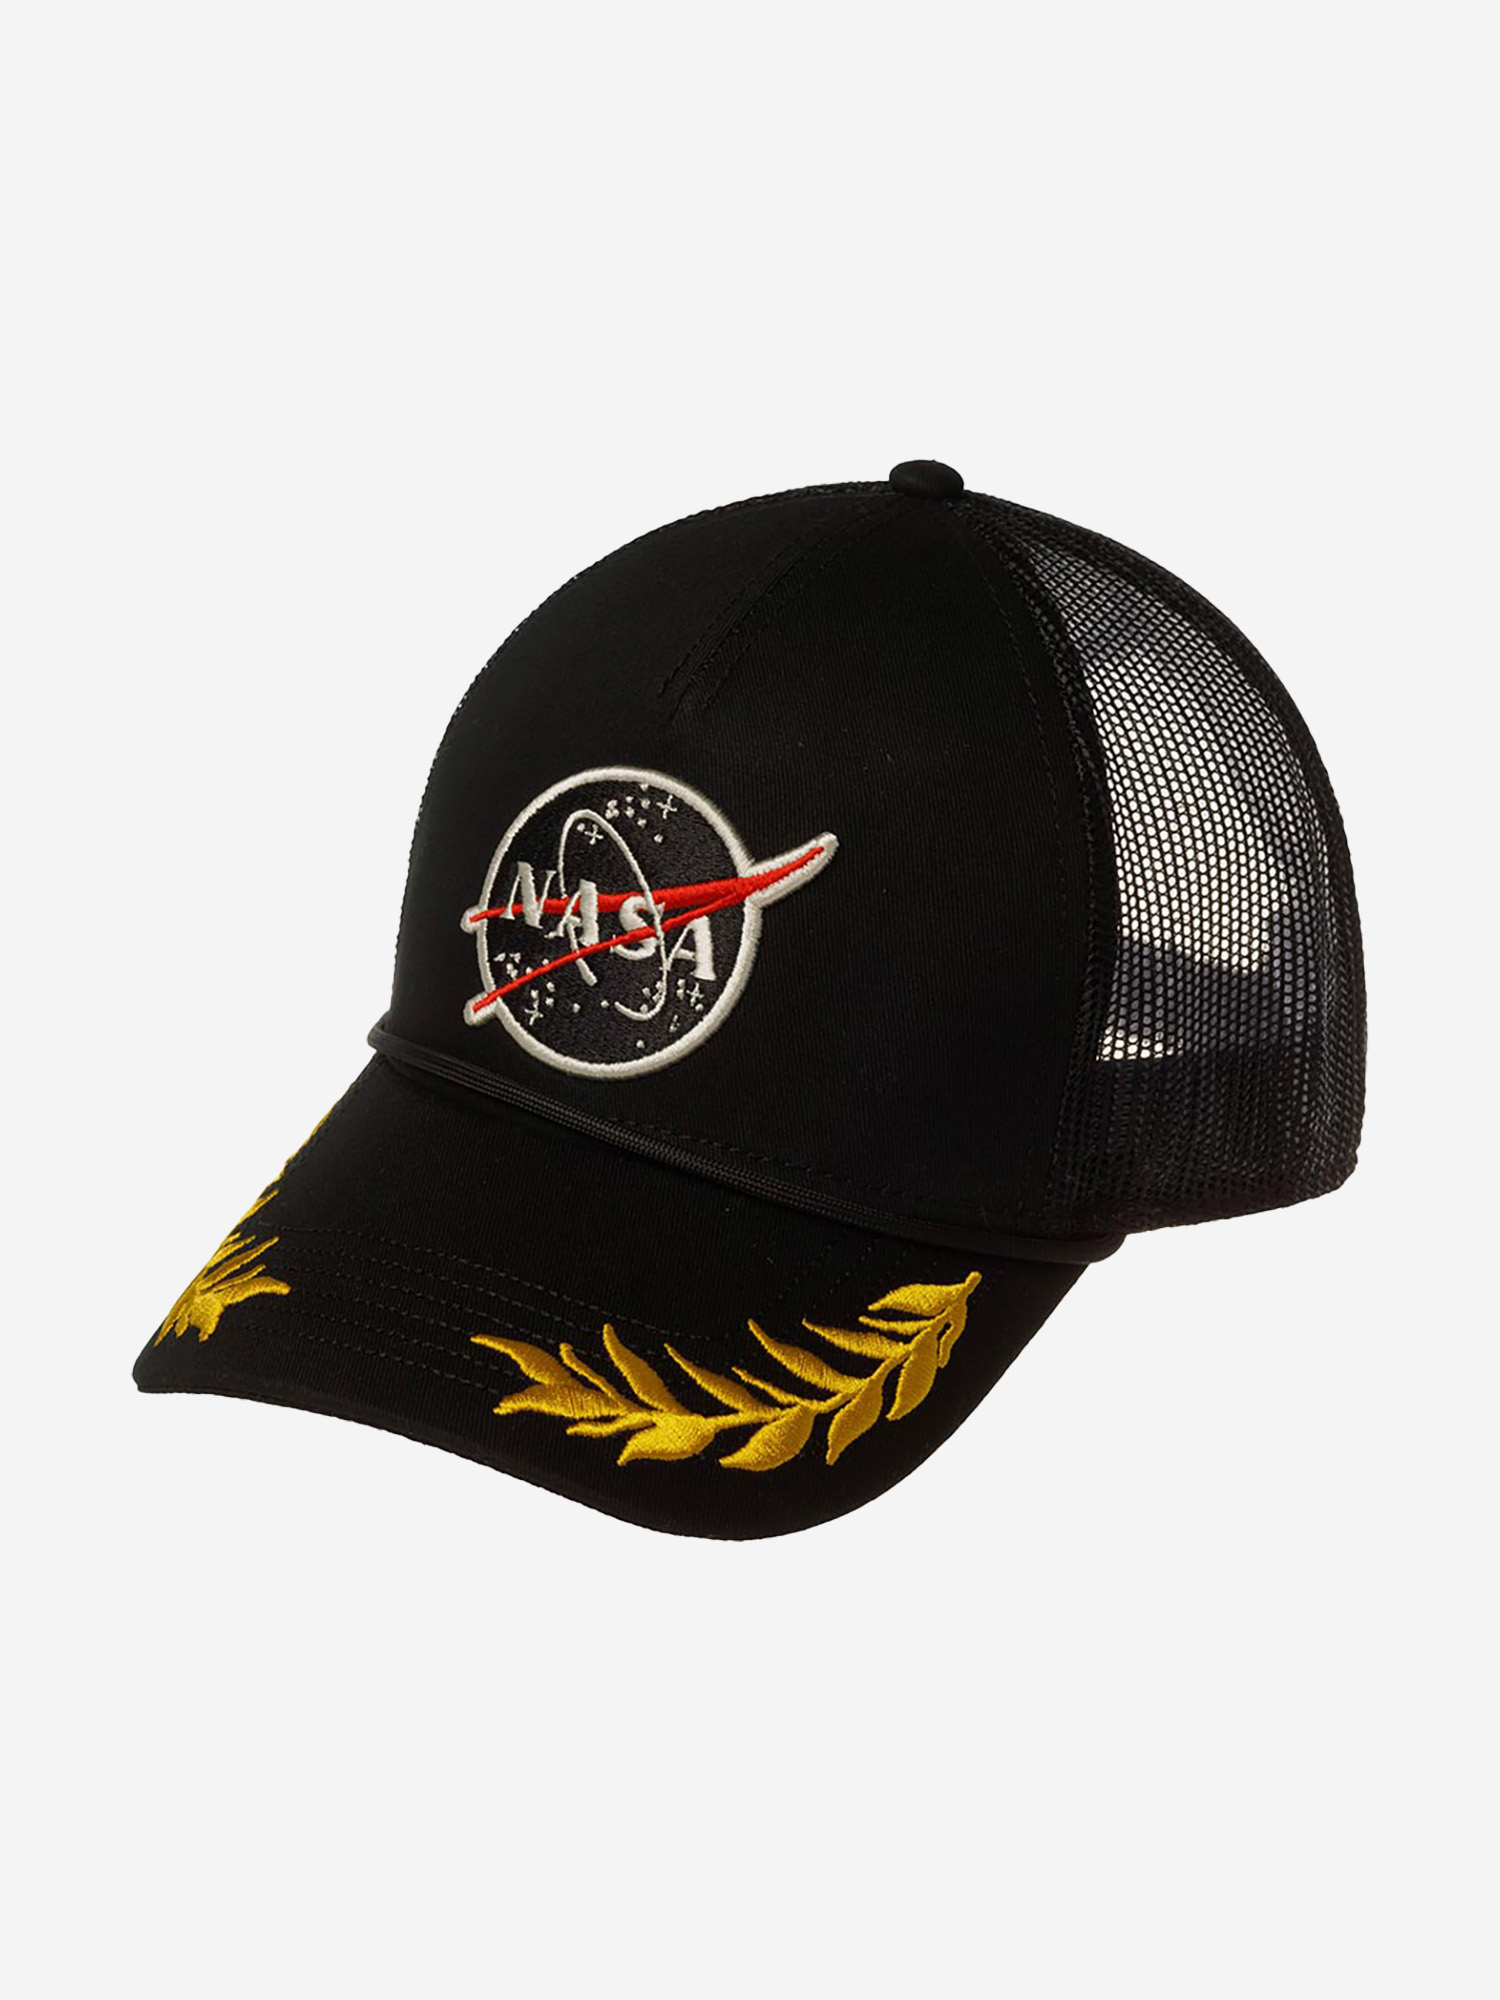 Бейсболка AMERICAN NEEDLE 45030A-NASA Space with NASA General (черный), Черный nasa archives